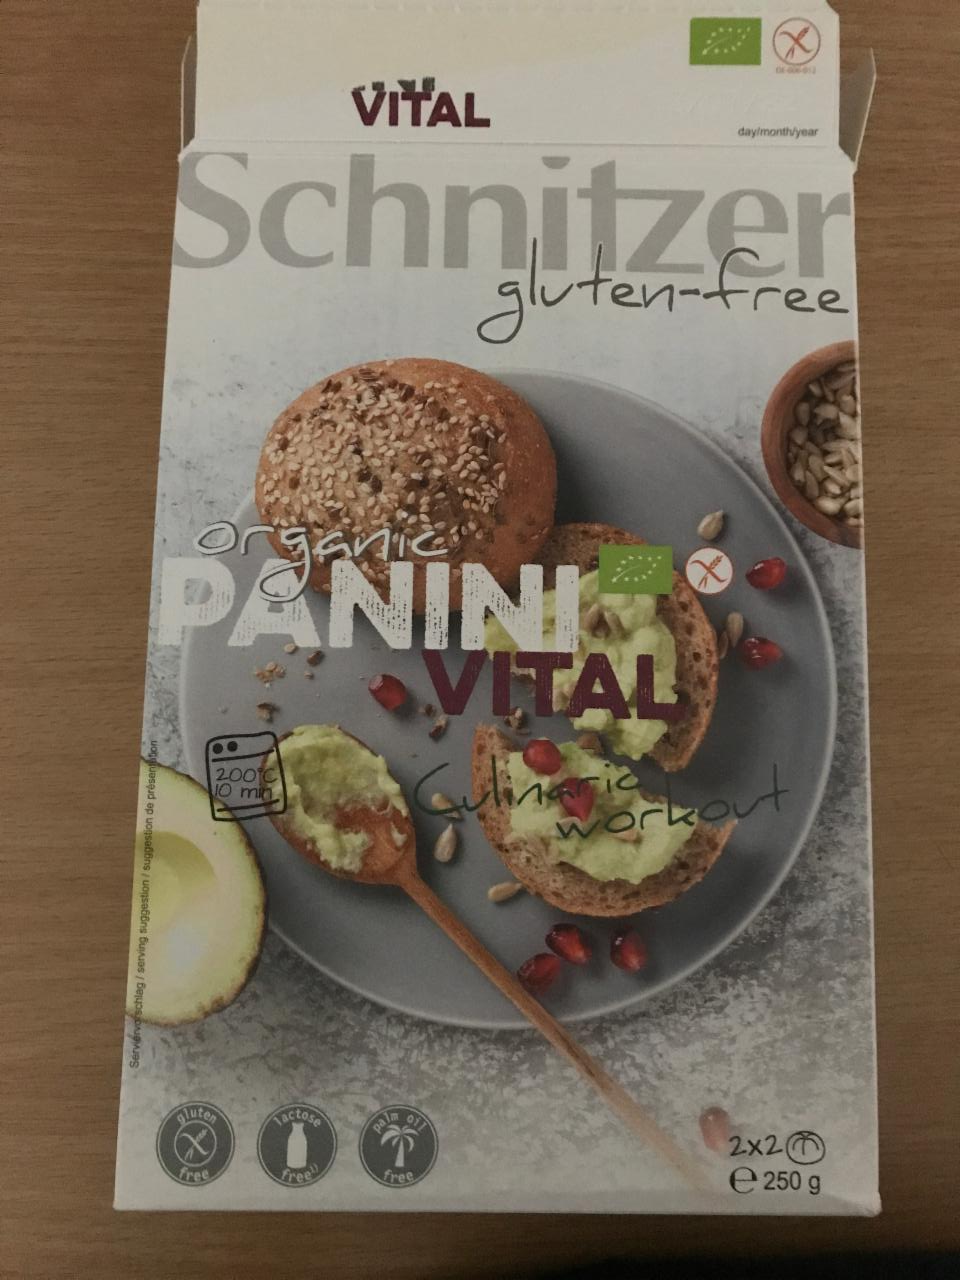 Fotografie - Panini vital Schnitzer gluten free